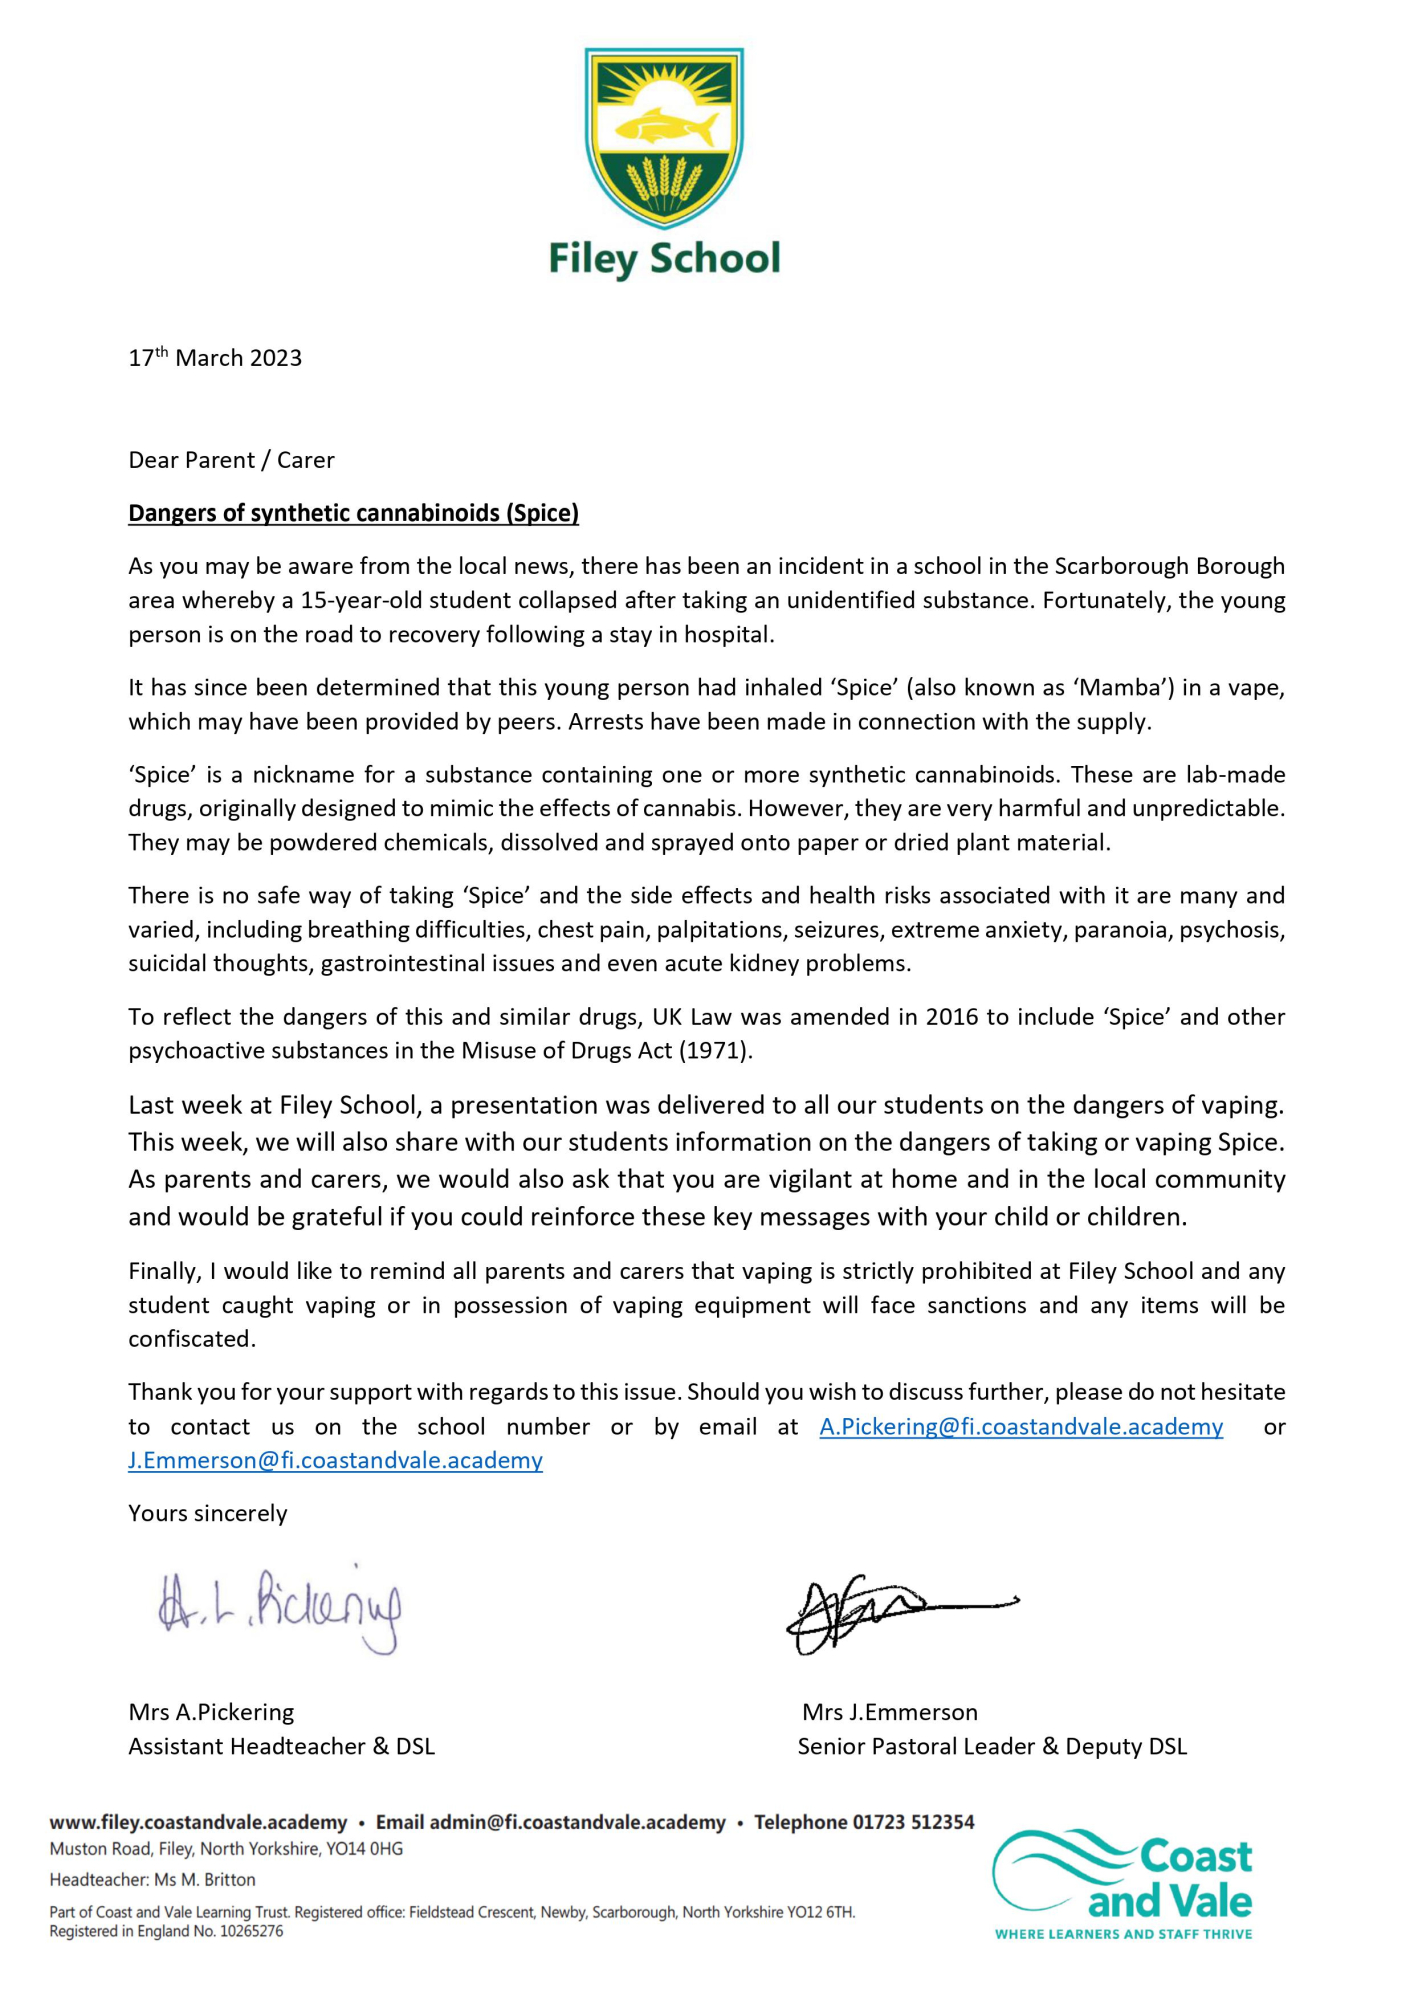 Safeguarding letter for Parents 17 -03-23